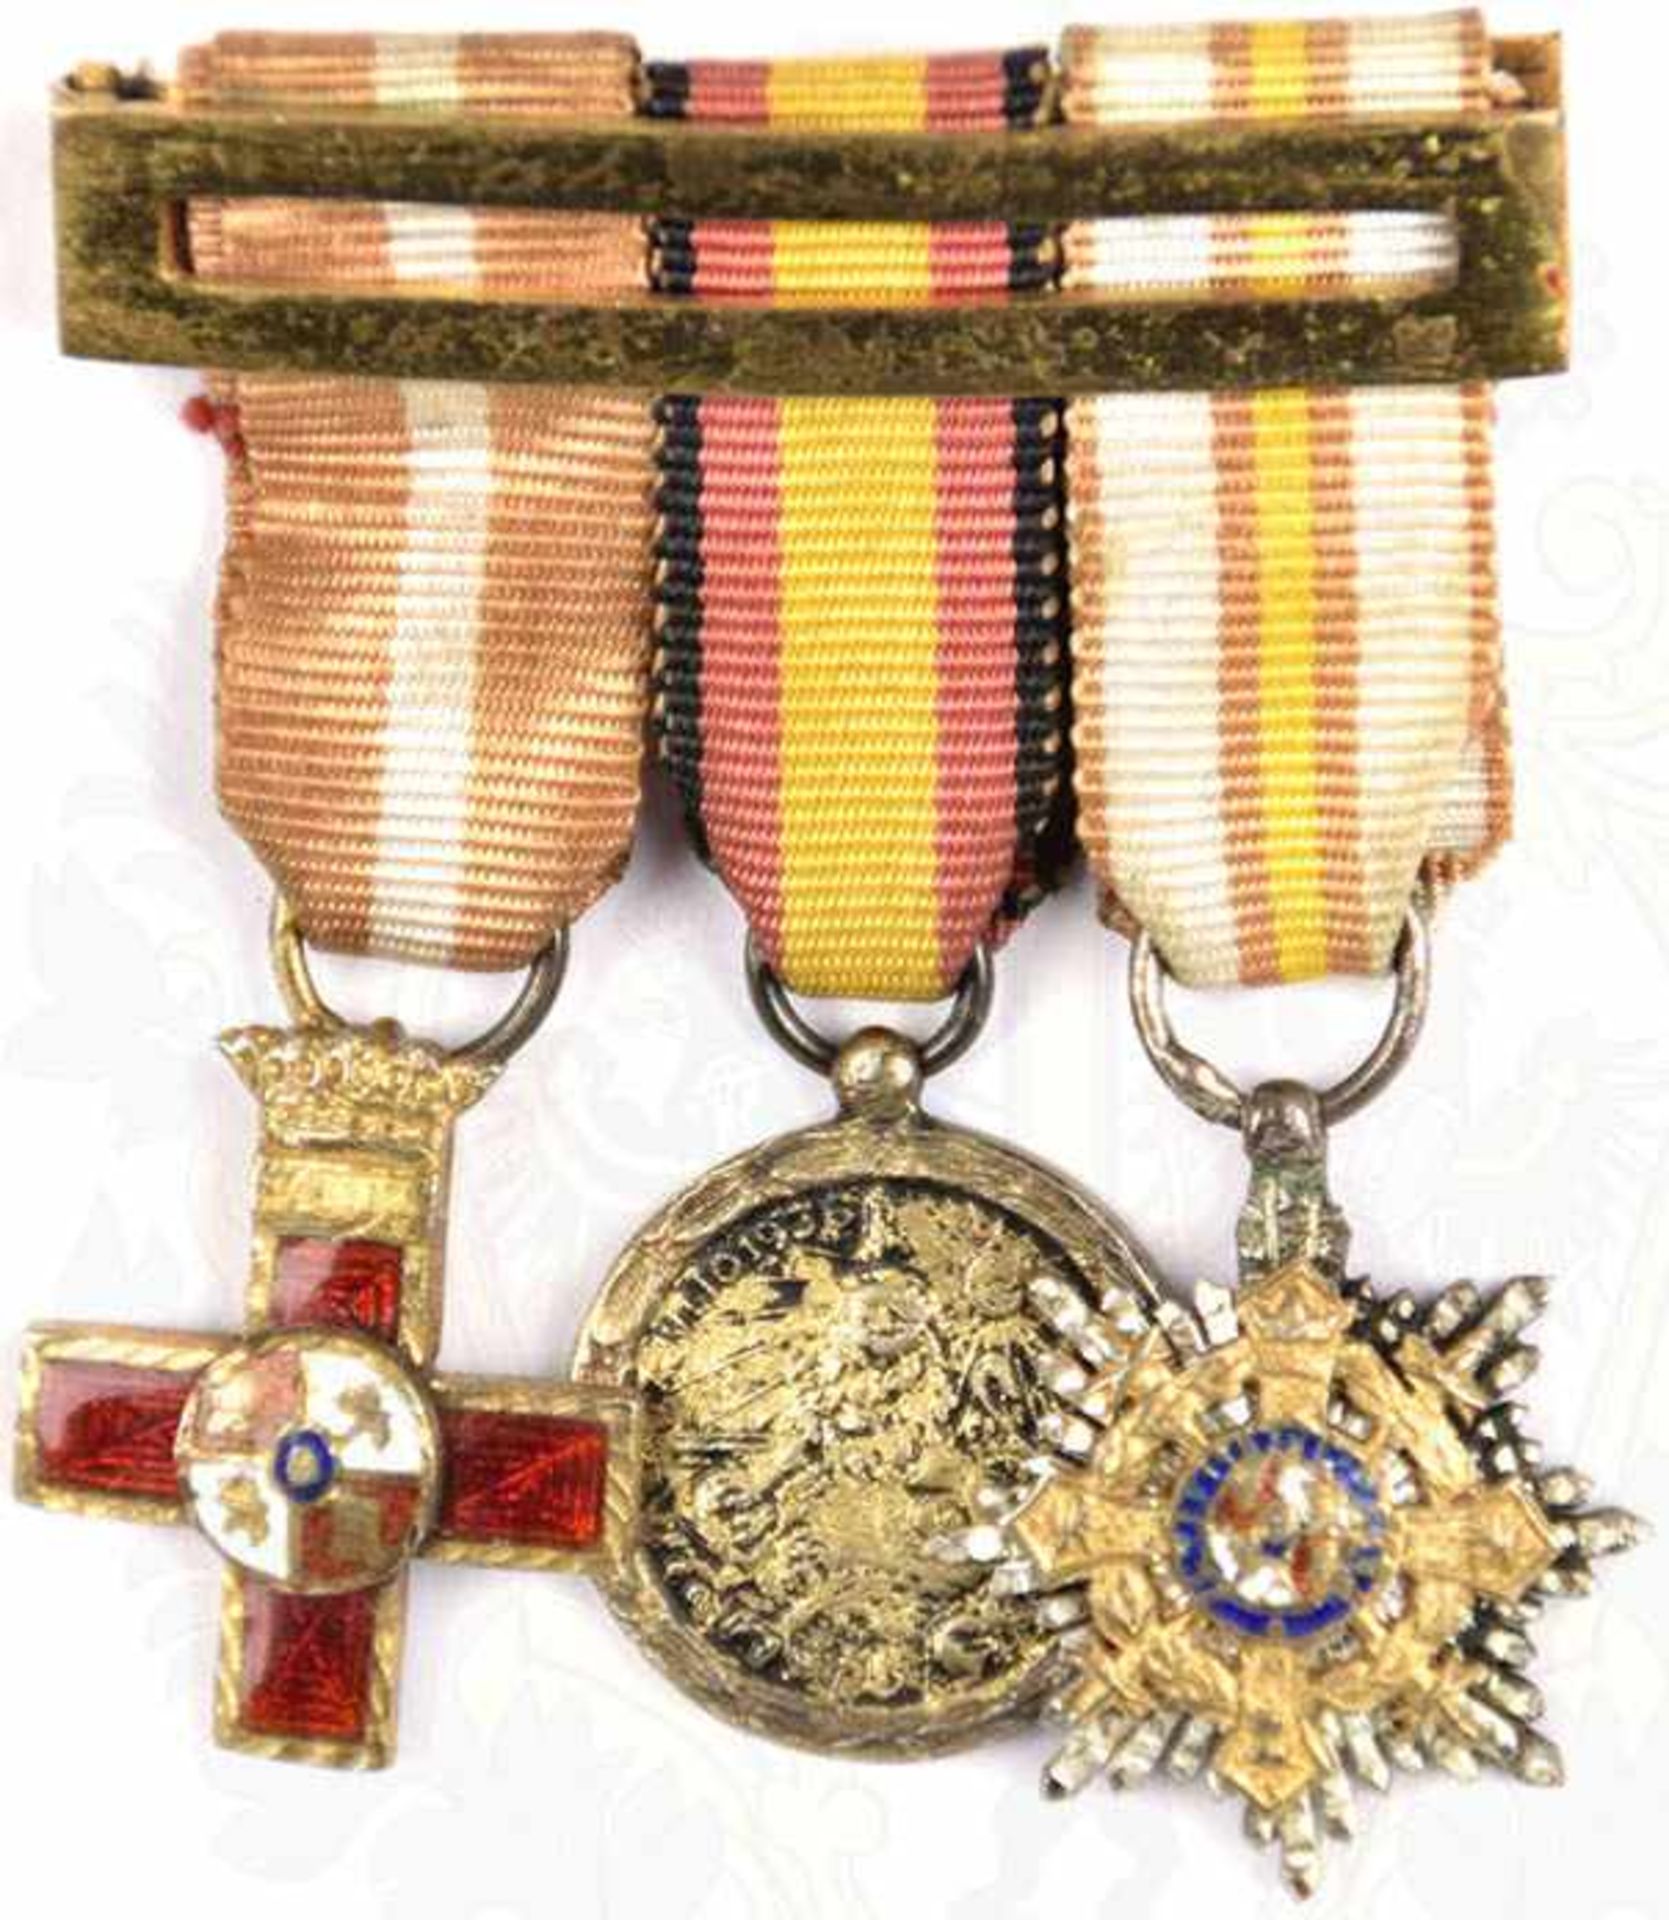 MINIATUR-ORDENSPANGE, Militärverdienstorden/Medaille de la Campagna/Siegeskreuz Cruz de Guerra,